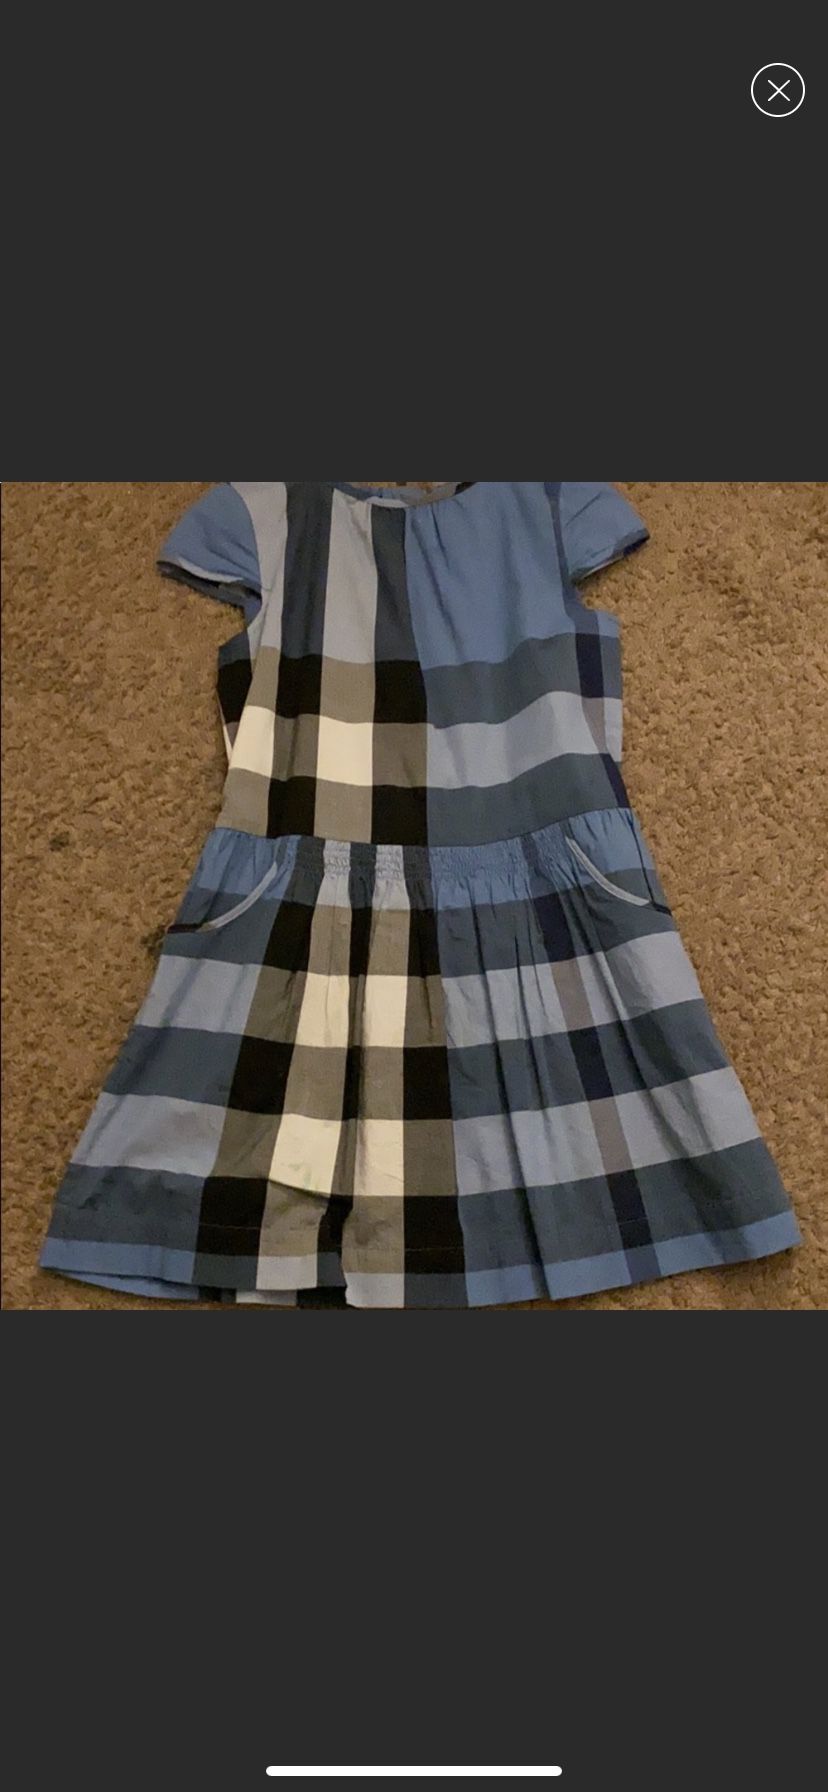 Burberry checkered dress